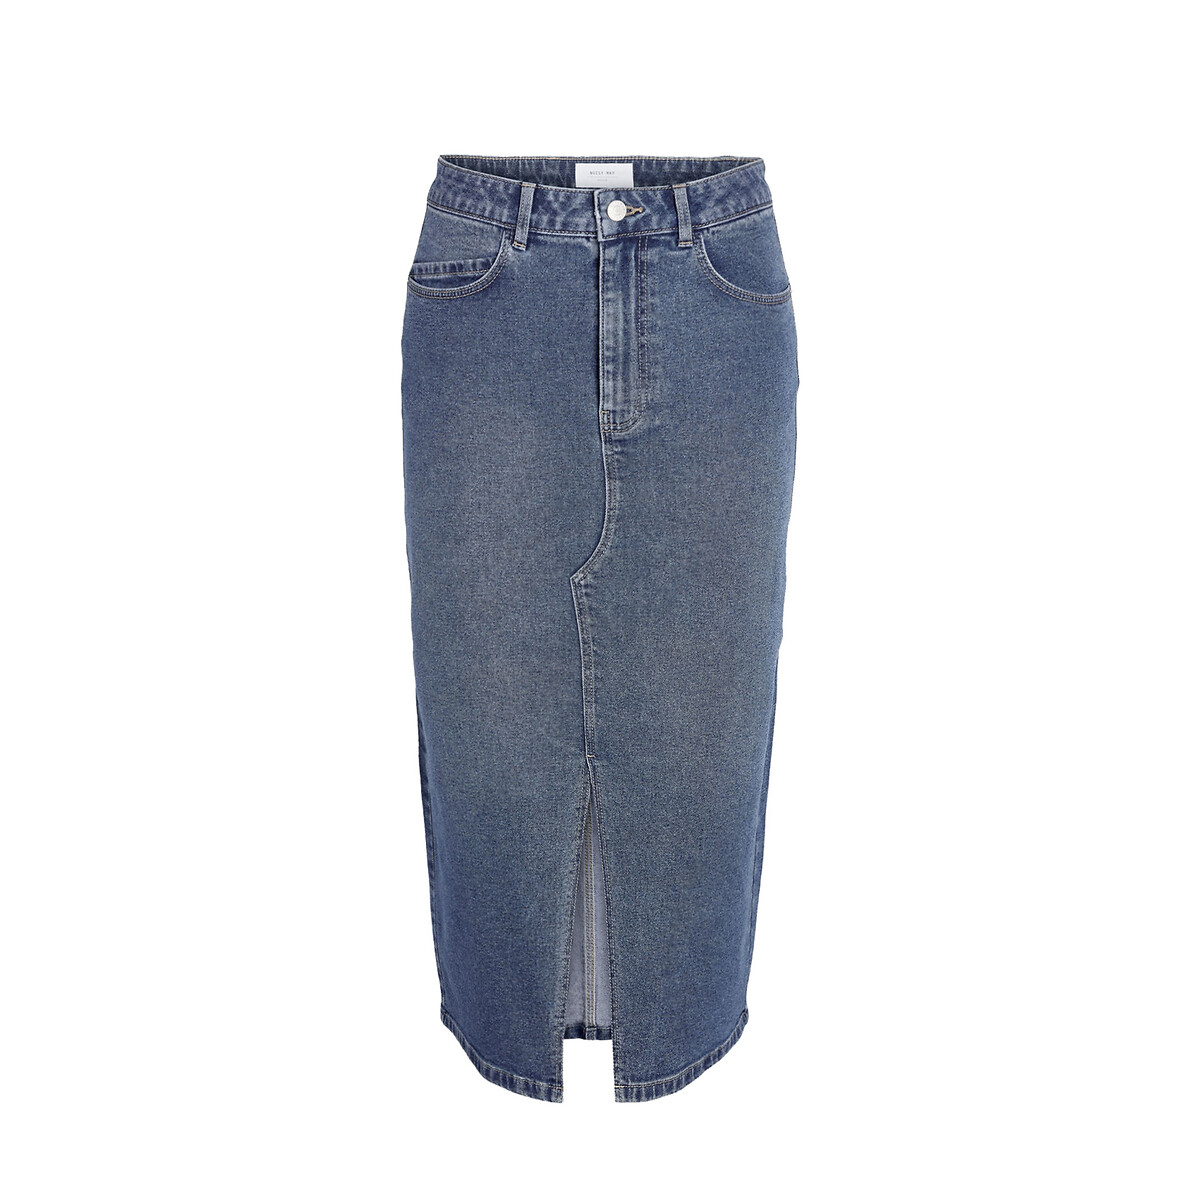 юбка laredoute юбка короткая из джинсовой ткани s синий Юбка-миди из джинсовой ткани XS синий